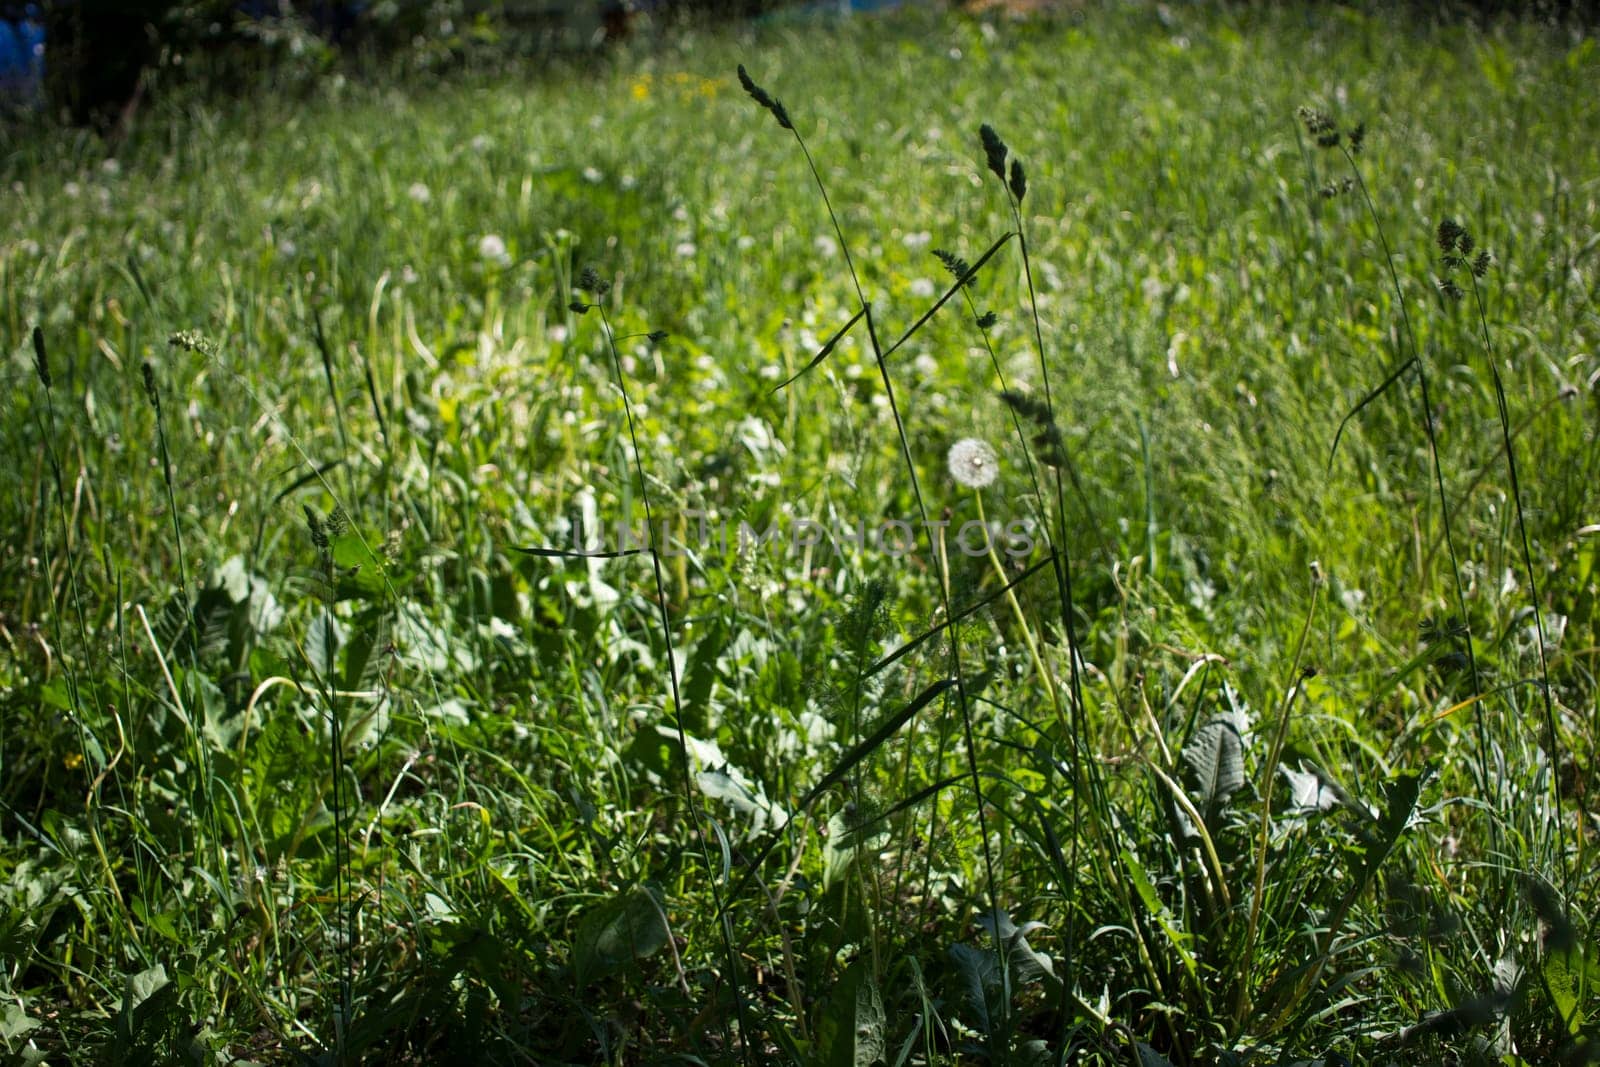 flowering ears of weeds. natural lawn in the bright sun by kajasja